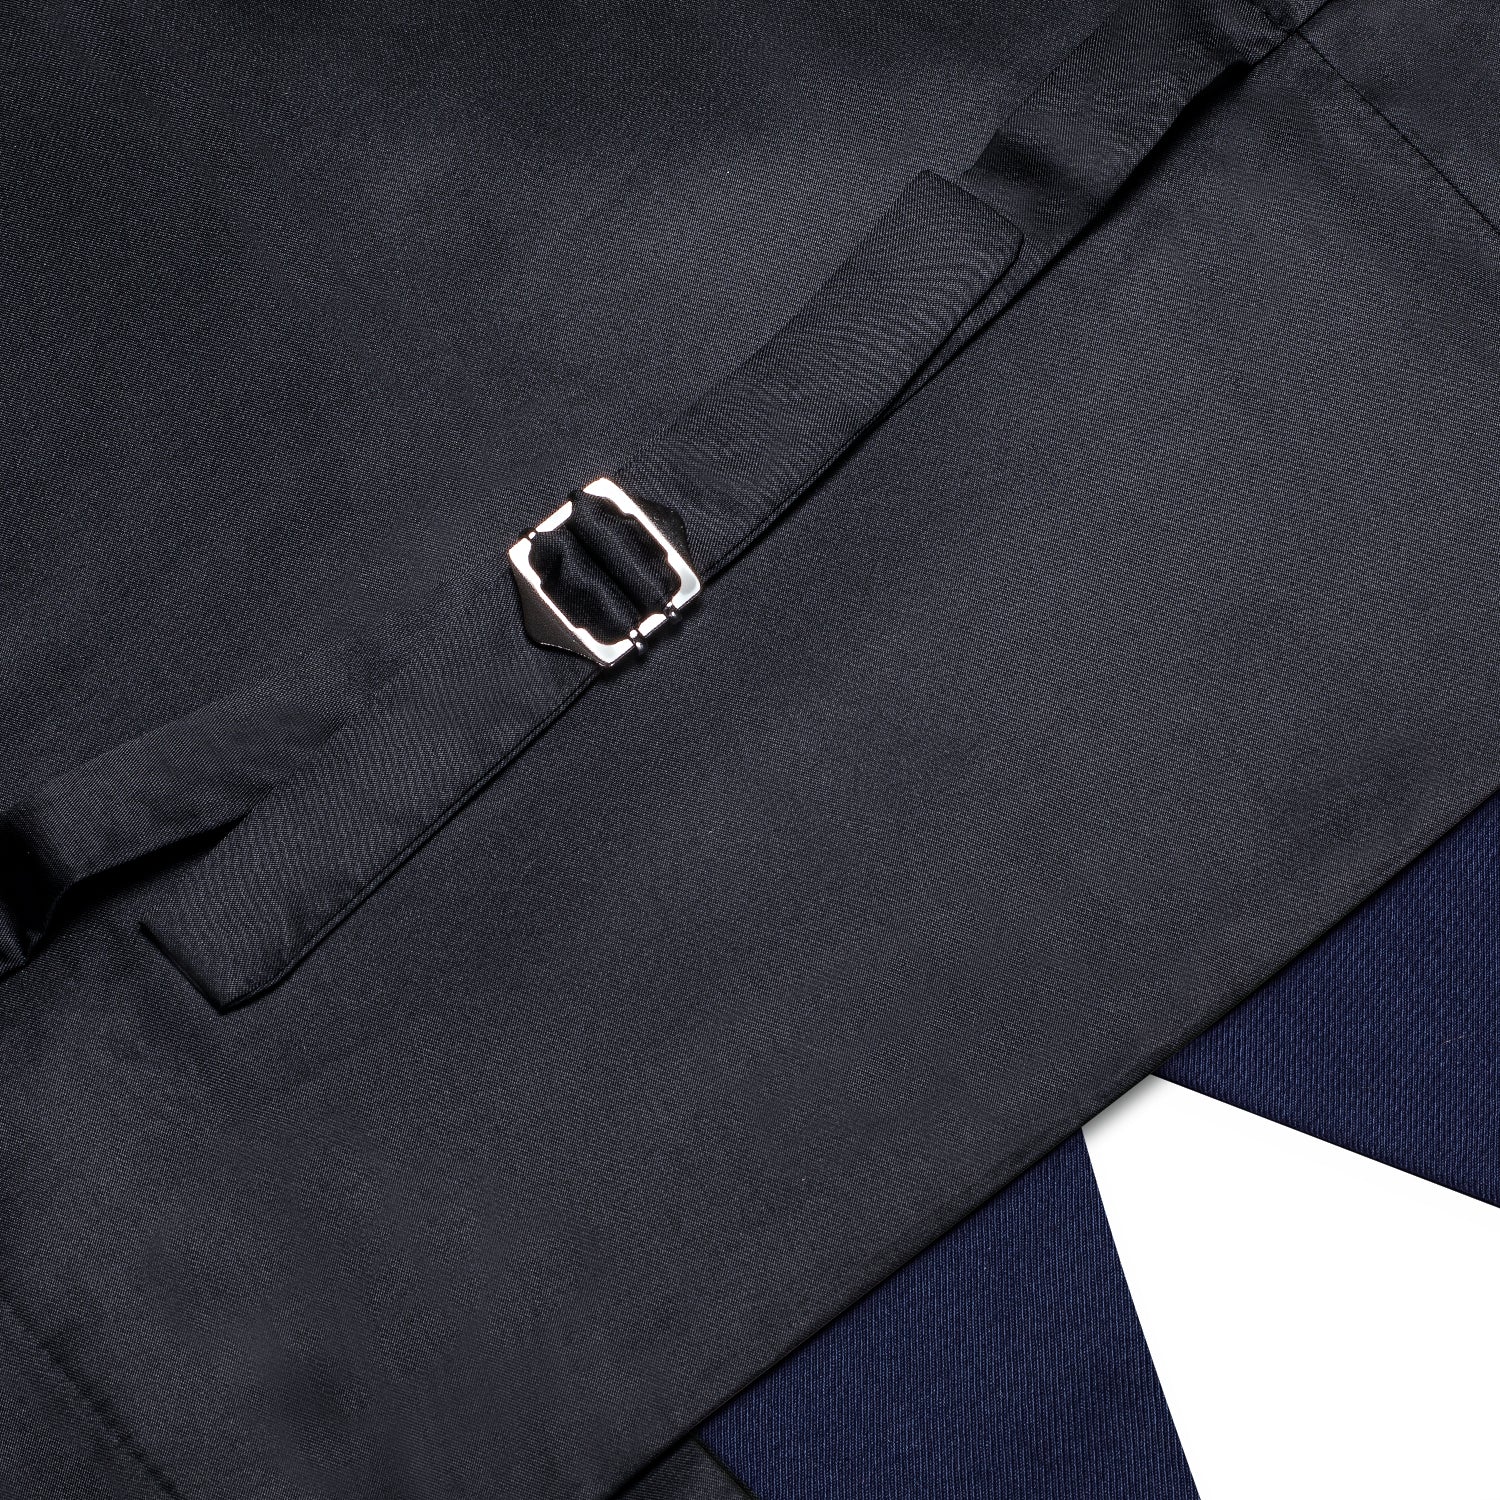 Navy Blue Solid Silk Style Men's Single Vest